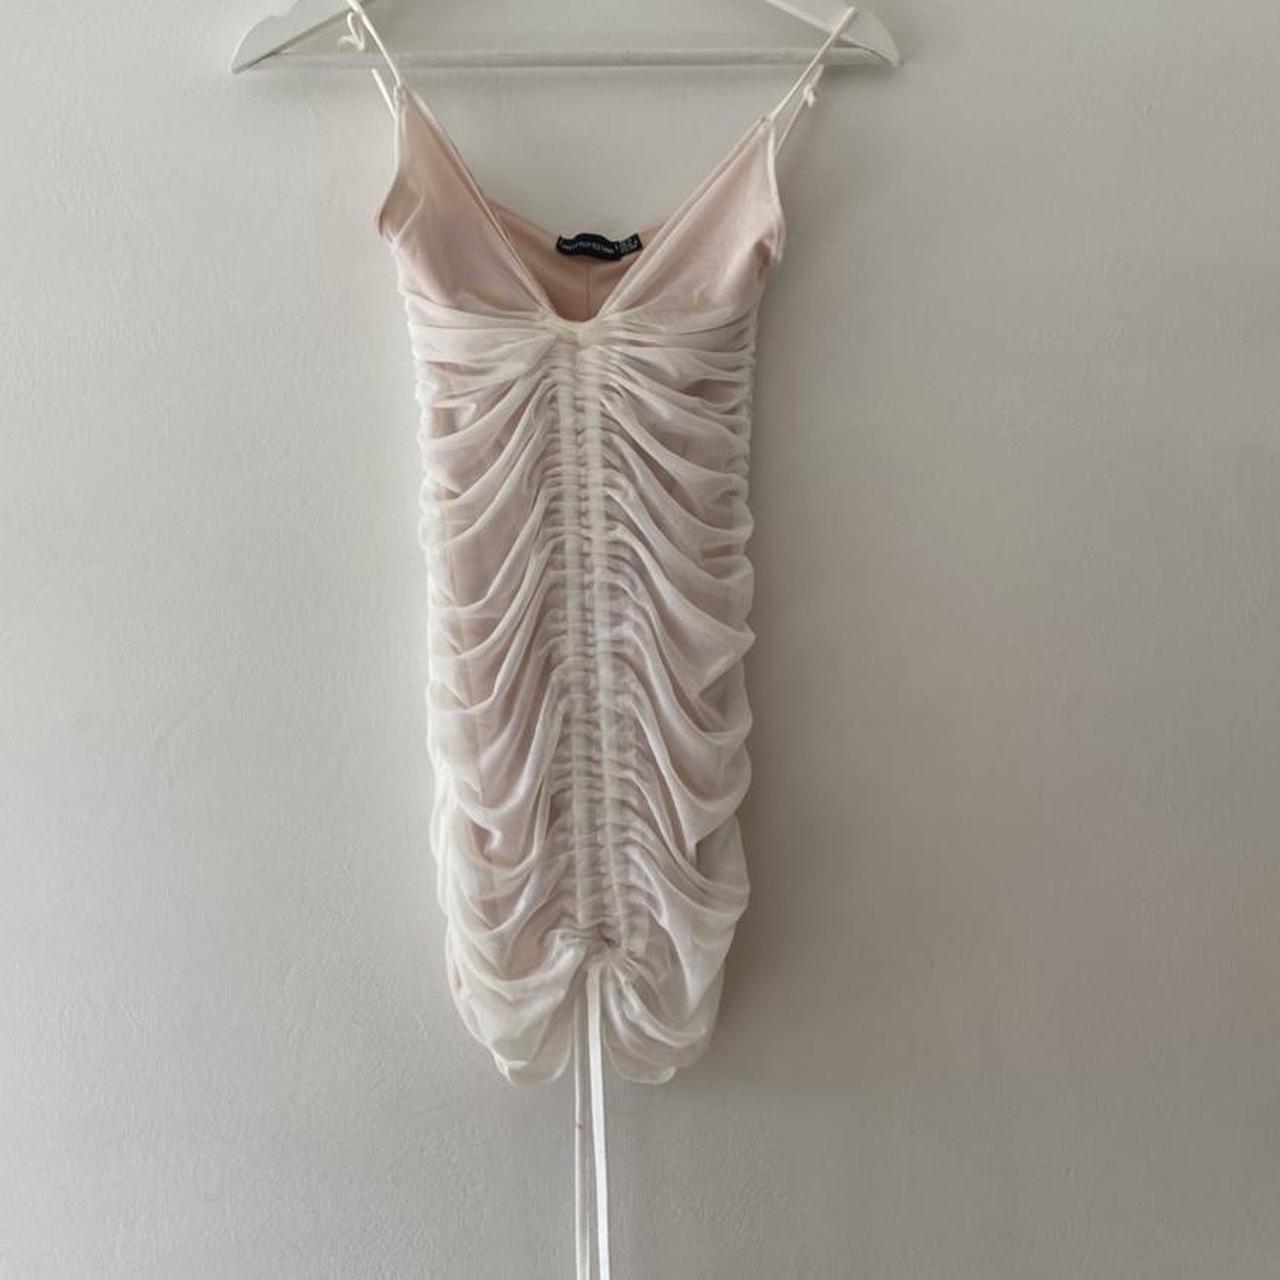 Plt ruched dress in white Worn once Size 8 #plt... - Depop